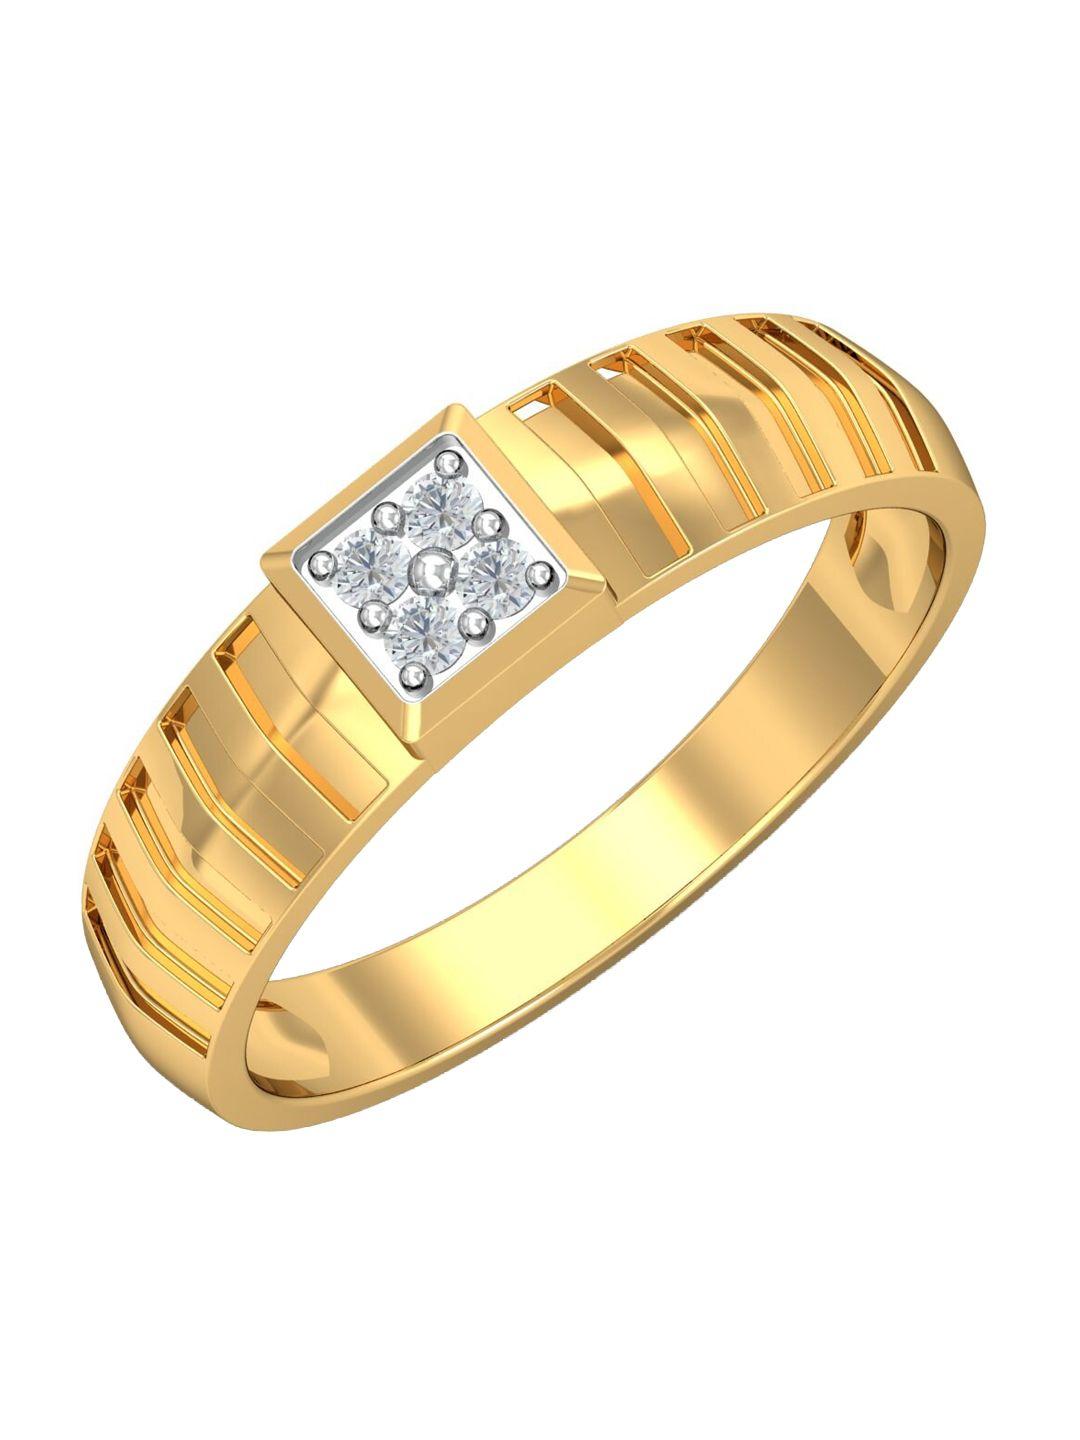 kuberbox men 18kt gold seraph diamond-studded ring-3.68 gm